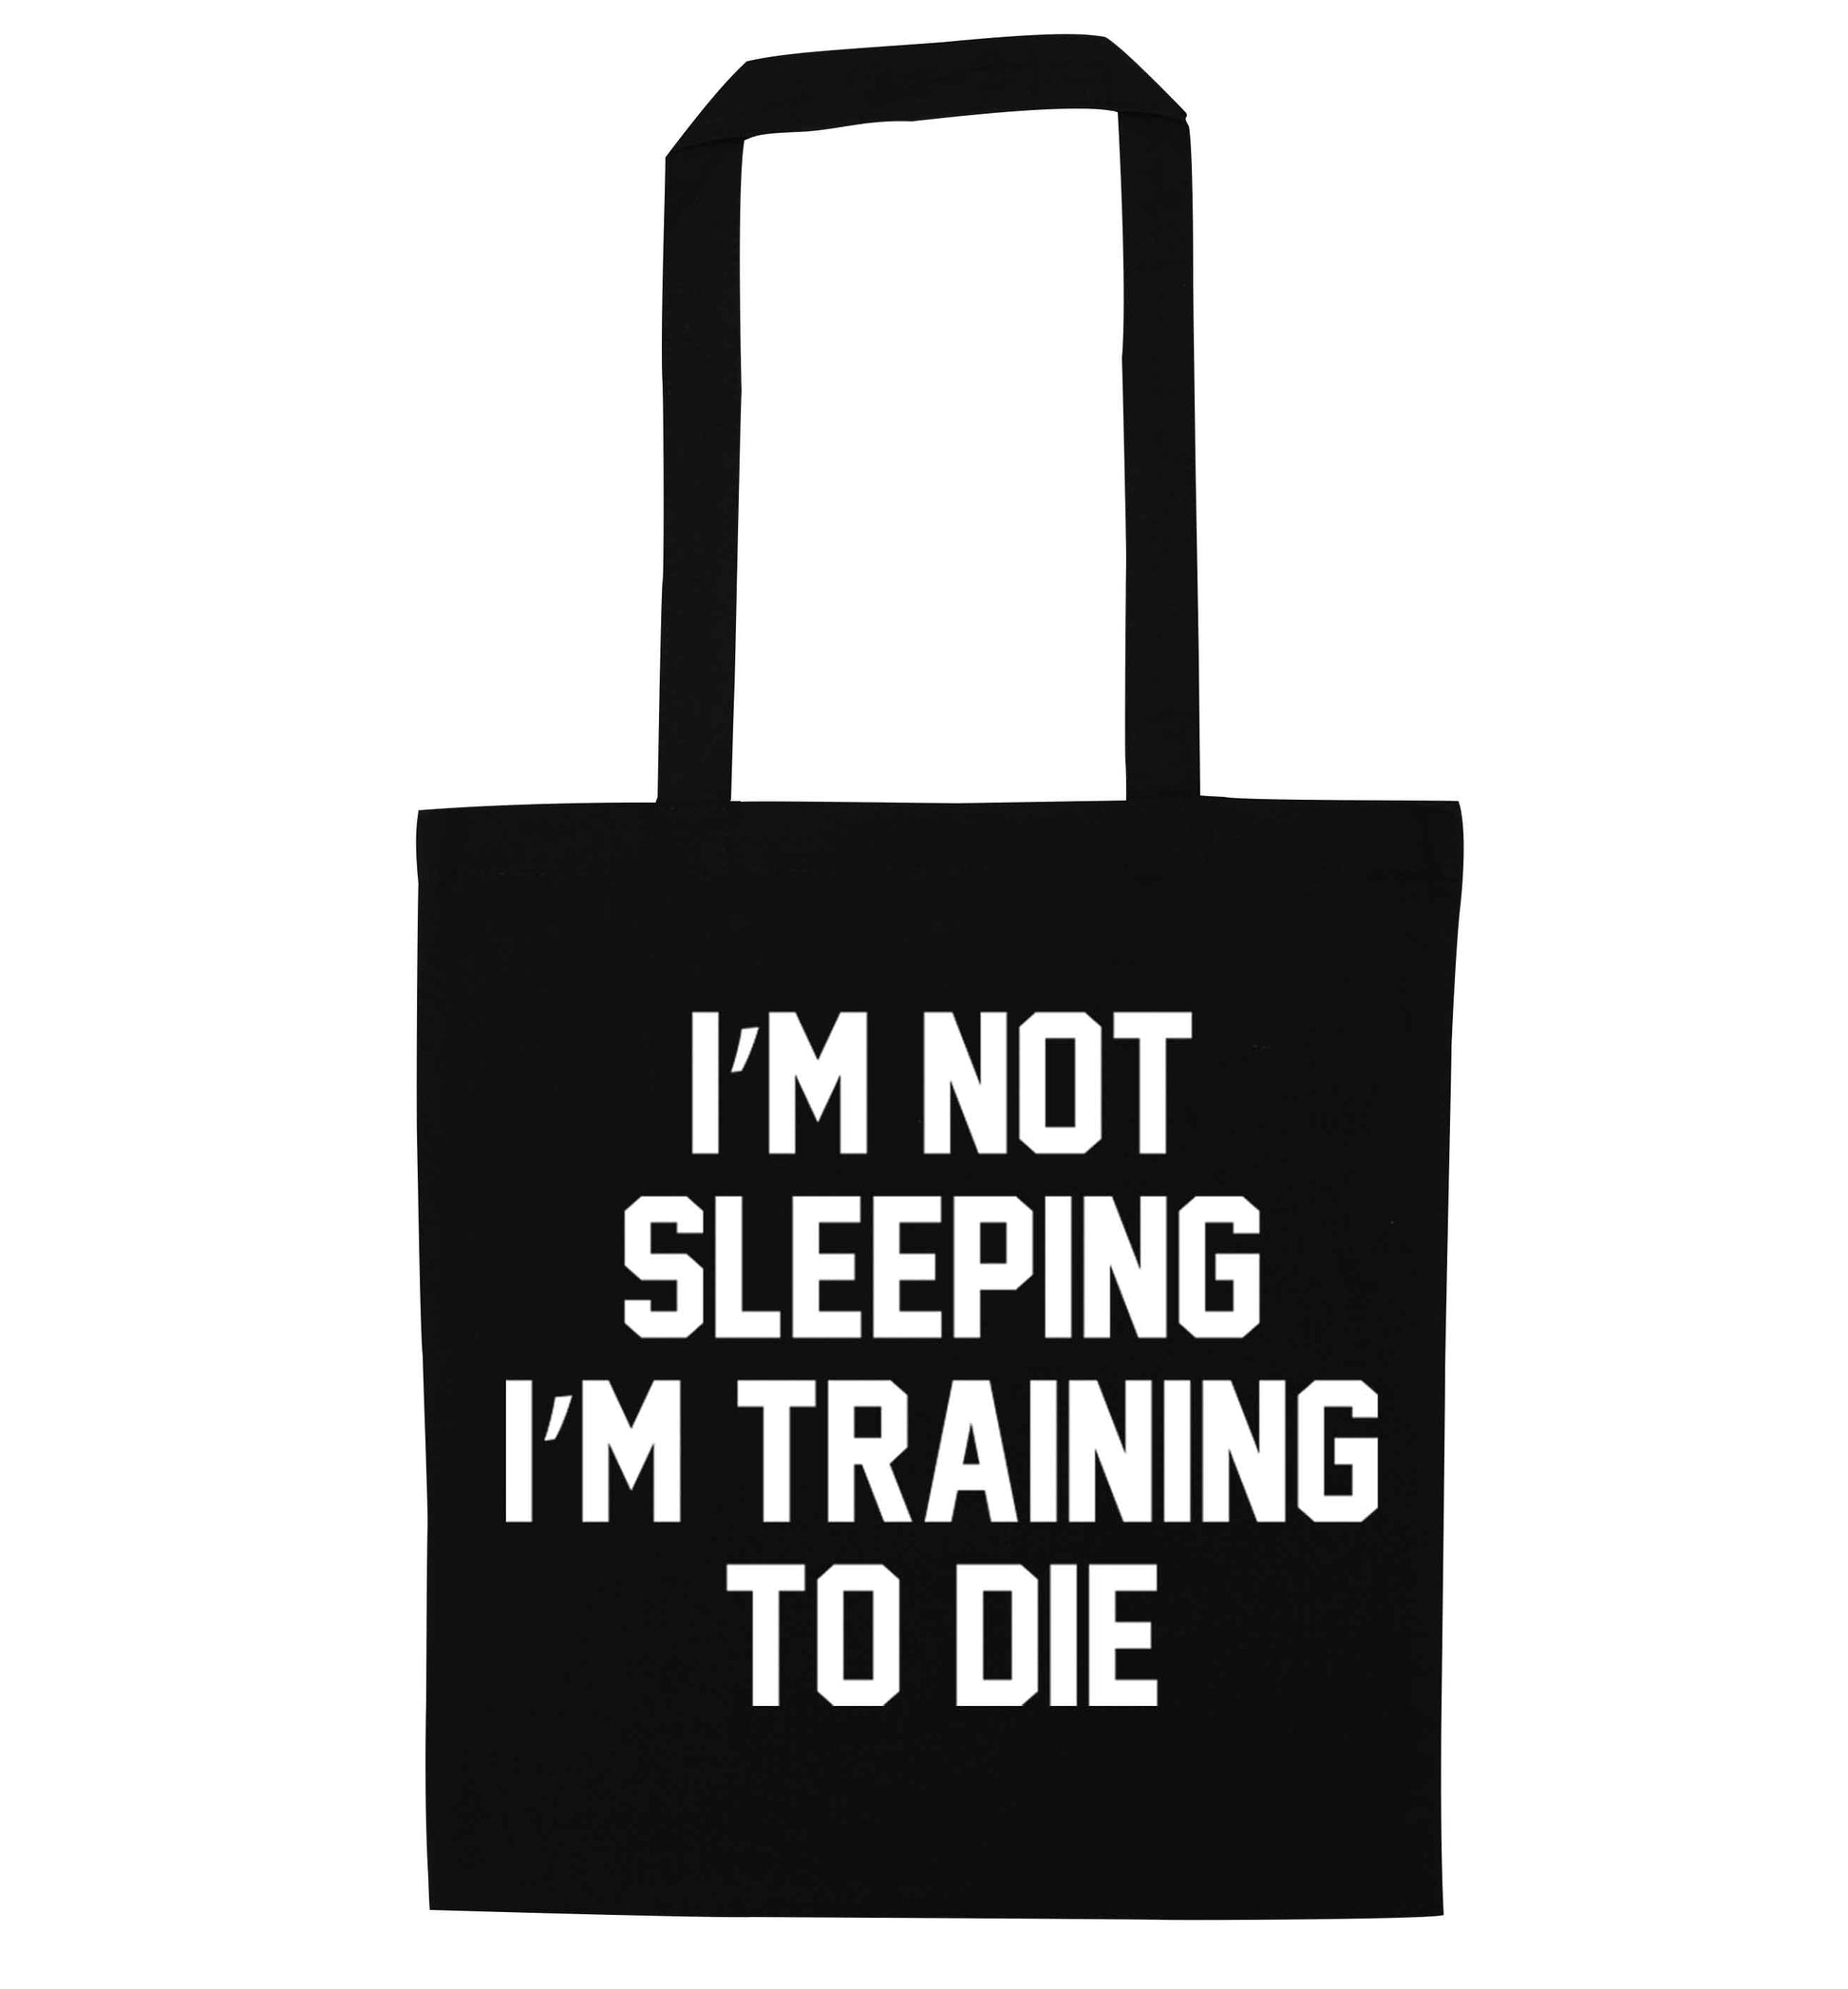 I'm not sleeping I'm training to die black tote bag